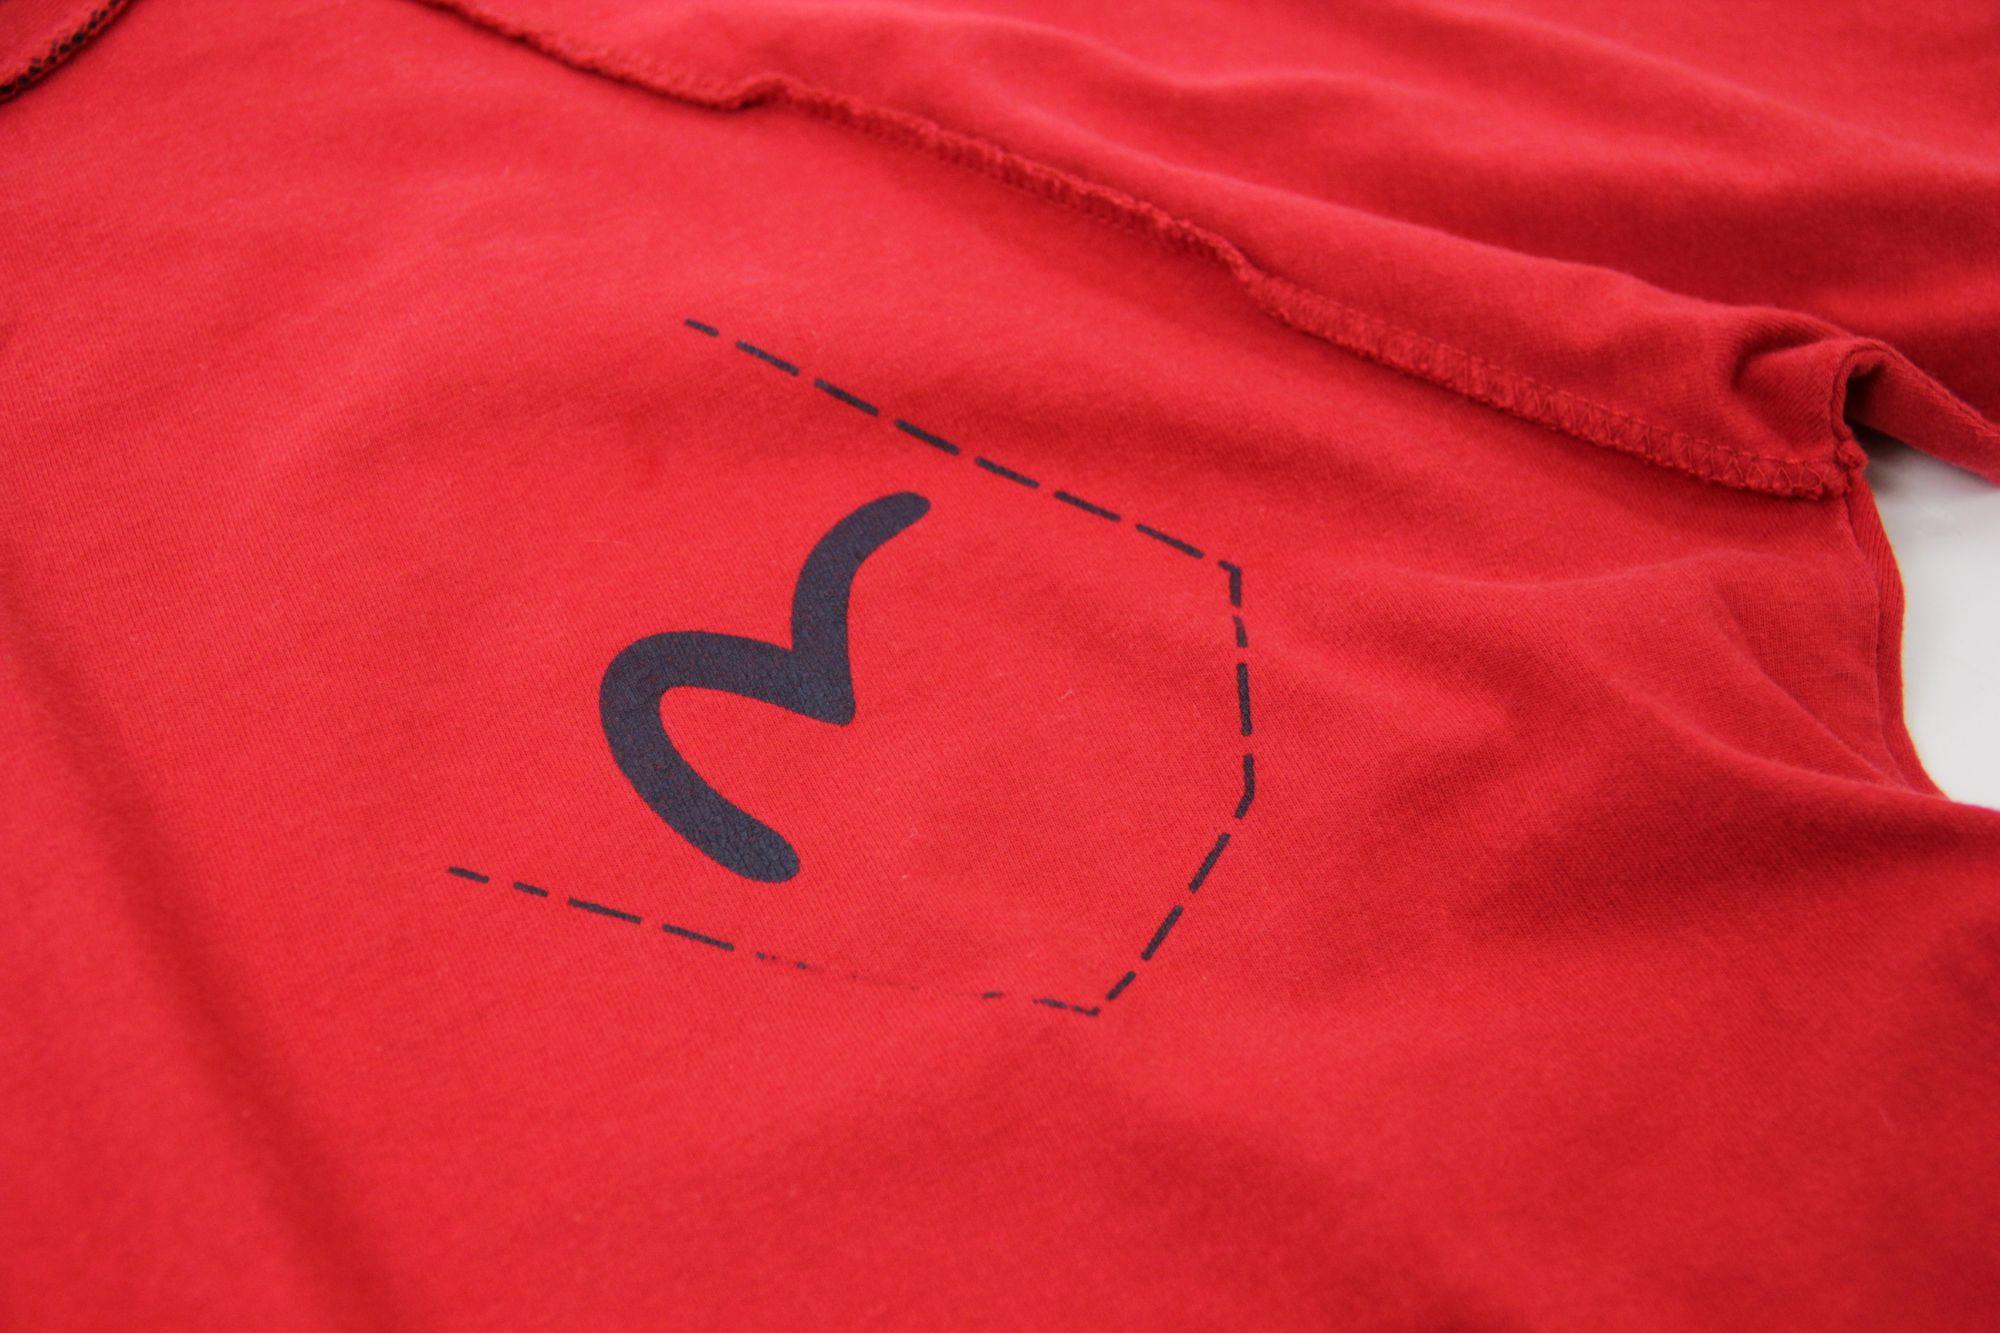 Evisu Vintage Red T-shirt, Size M